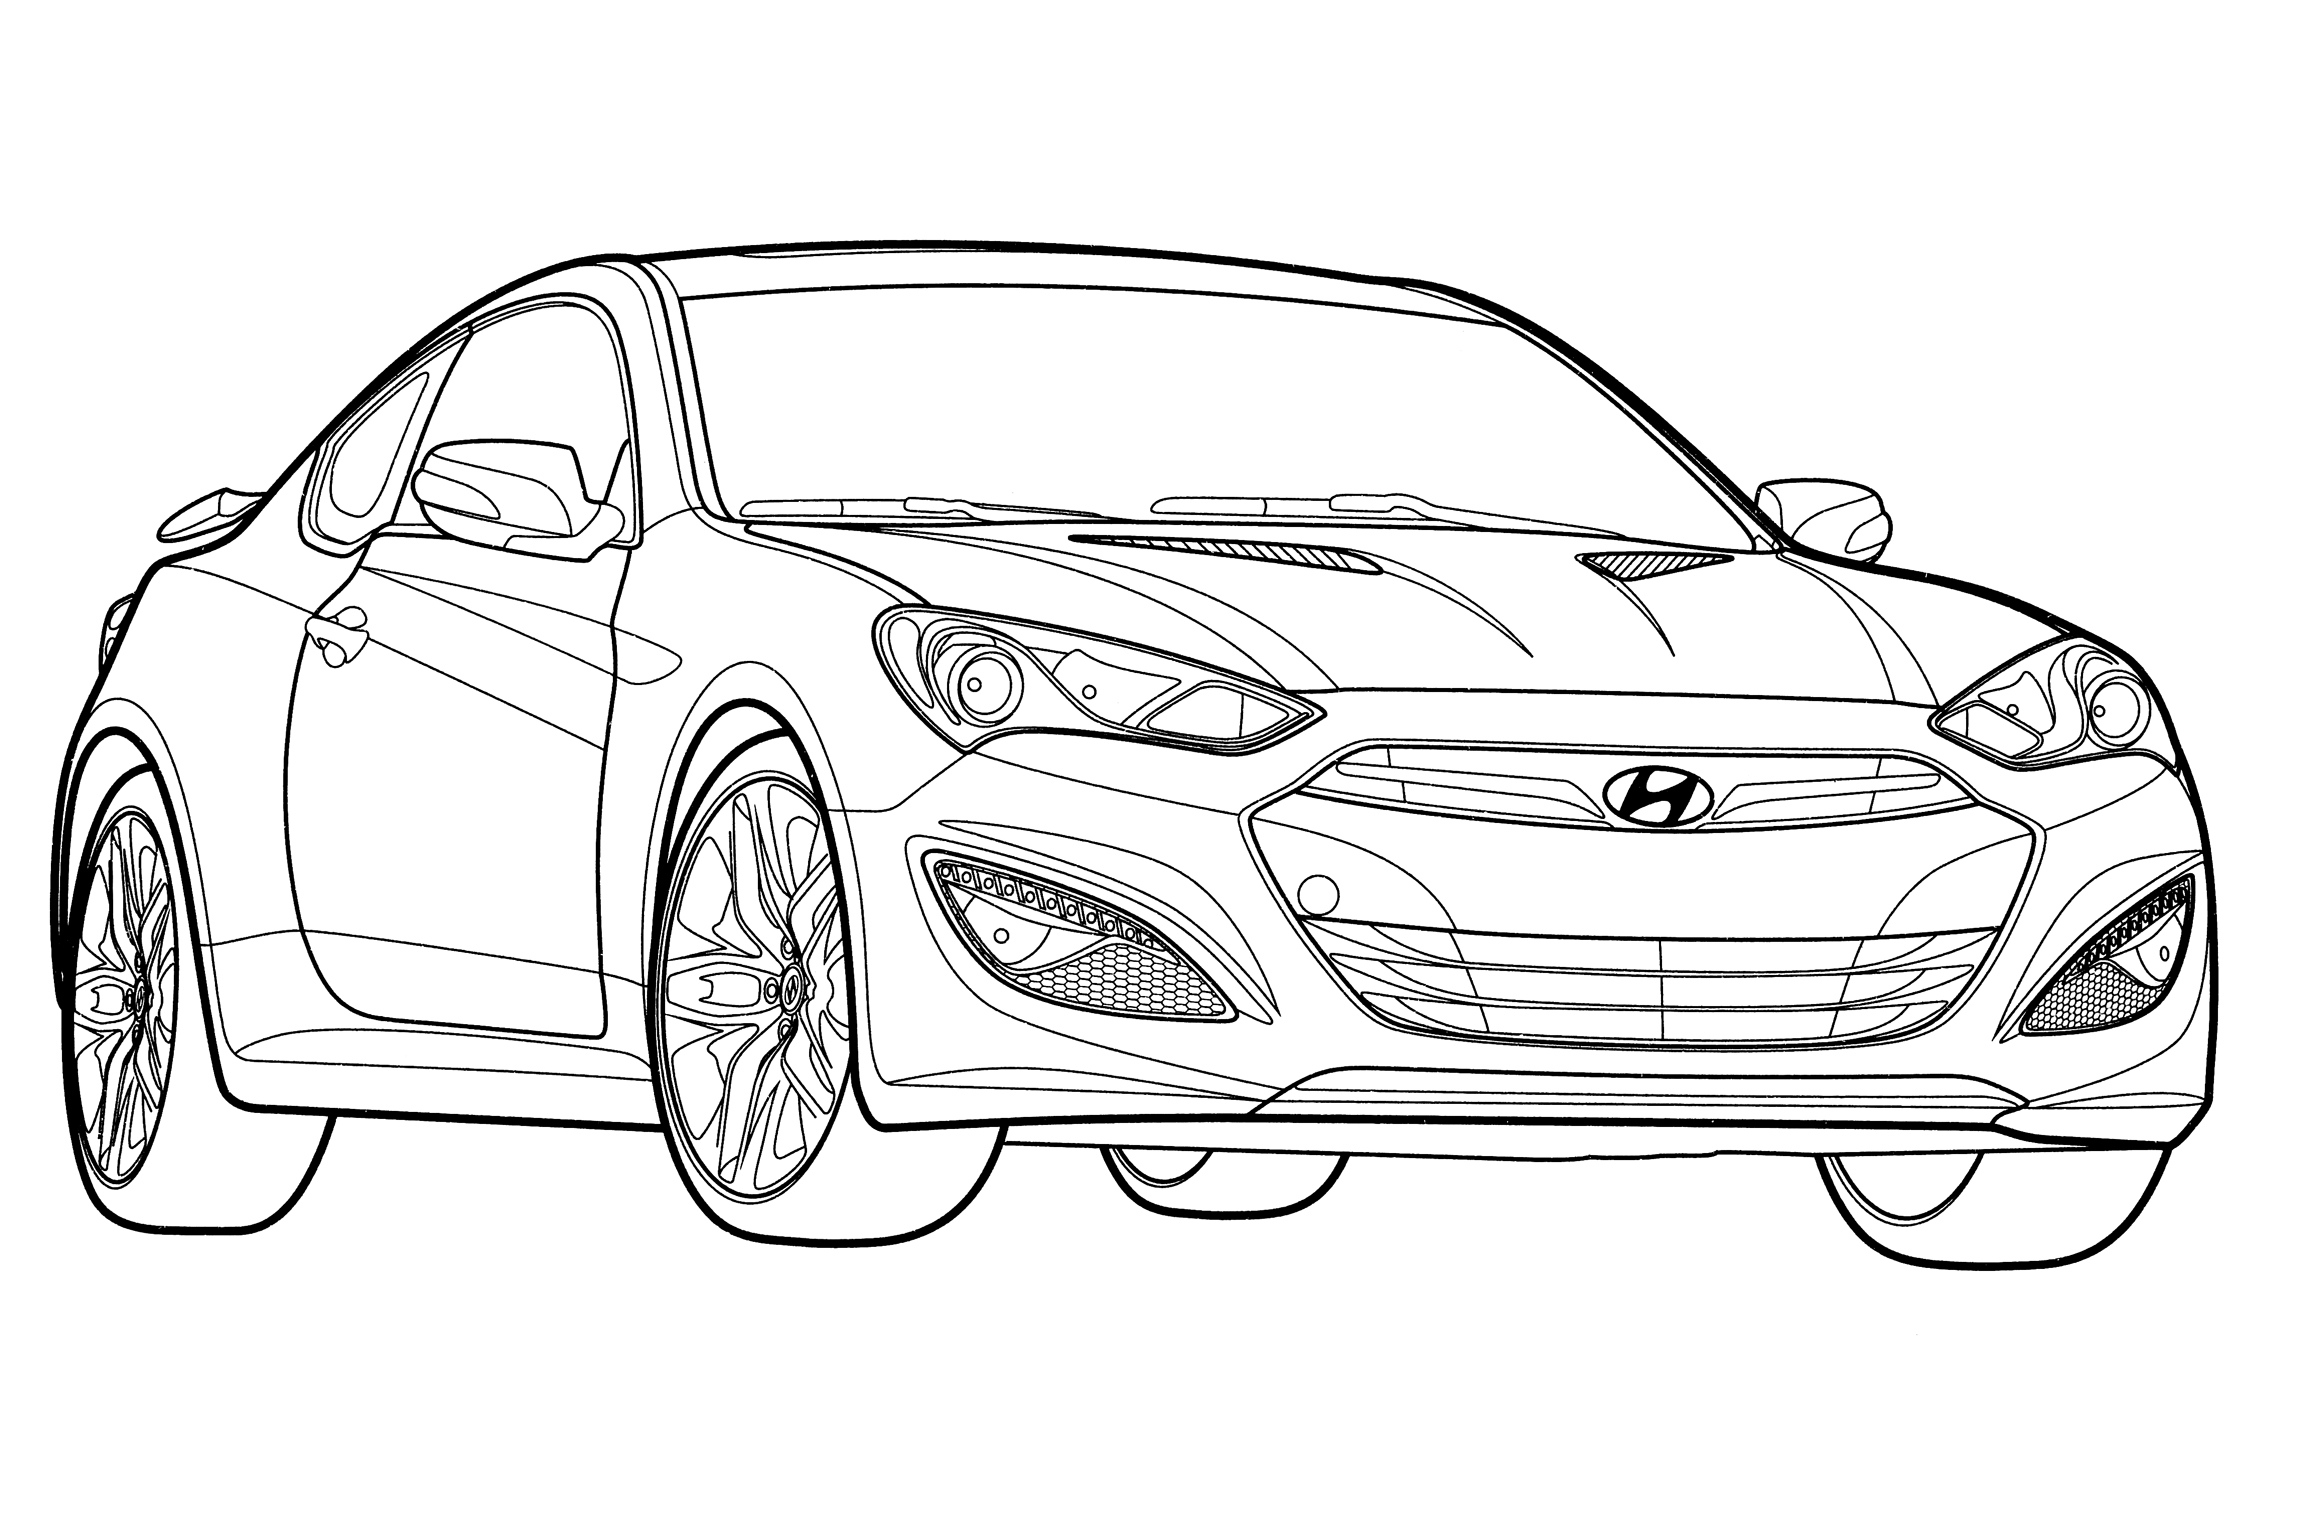 Hyundai genesis coupe coloring page